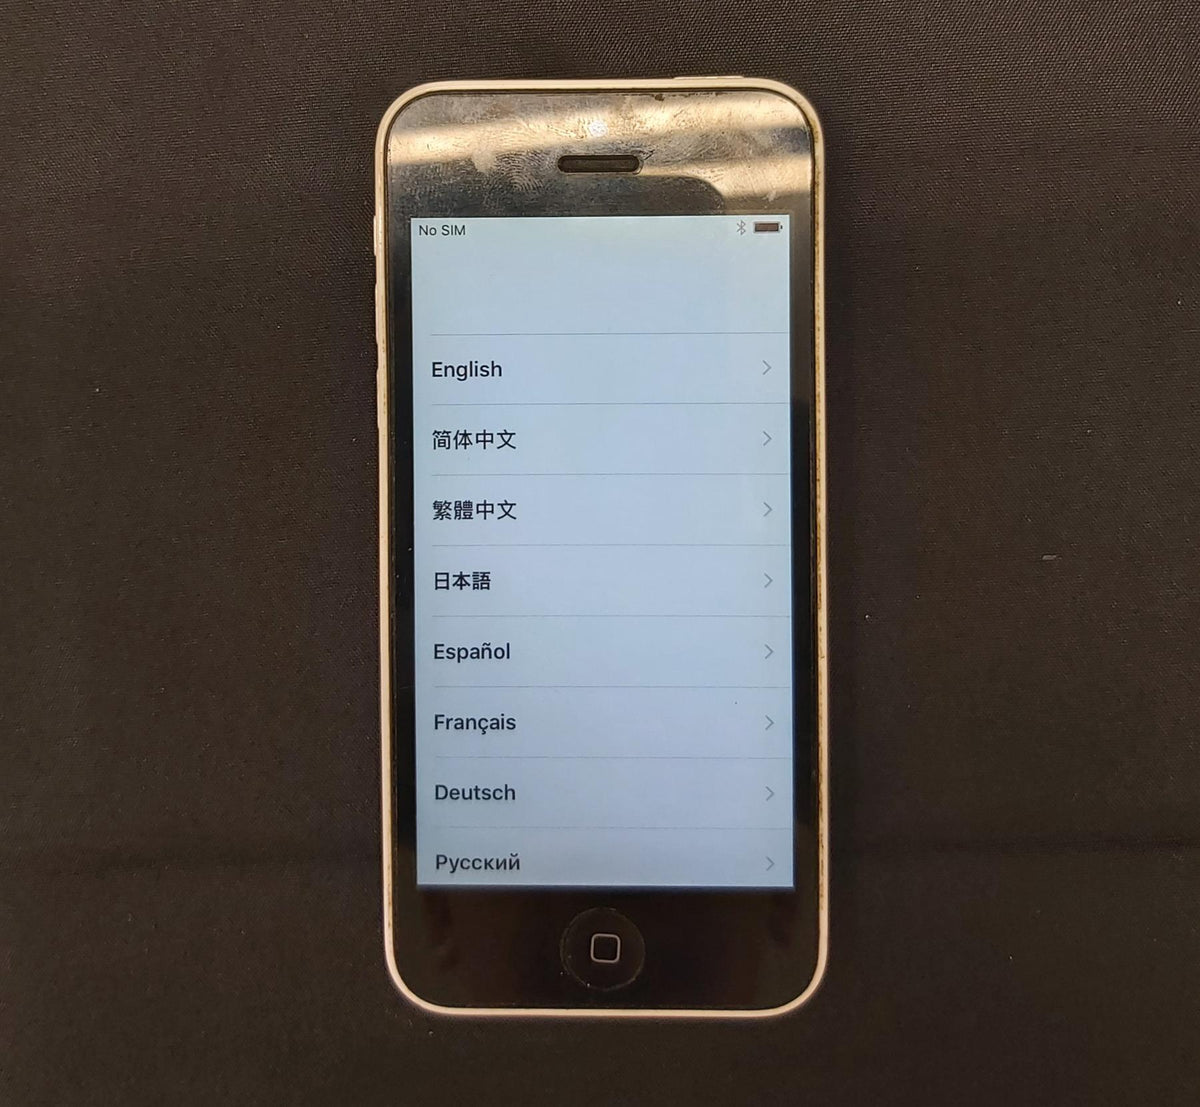 Apple iPhone 5c - 16 GB - White - Fair Condition - Unlocked